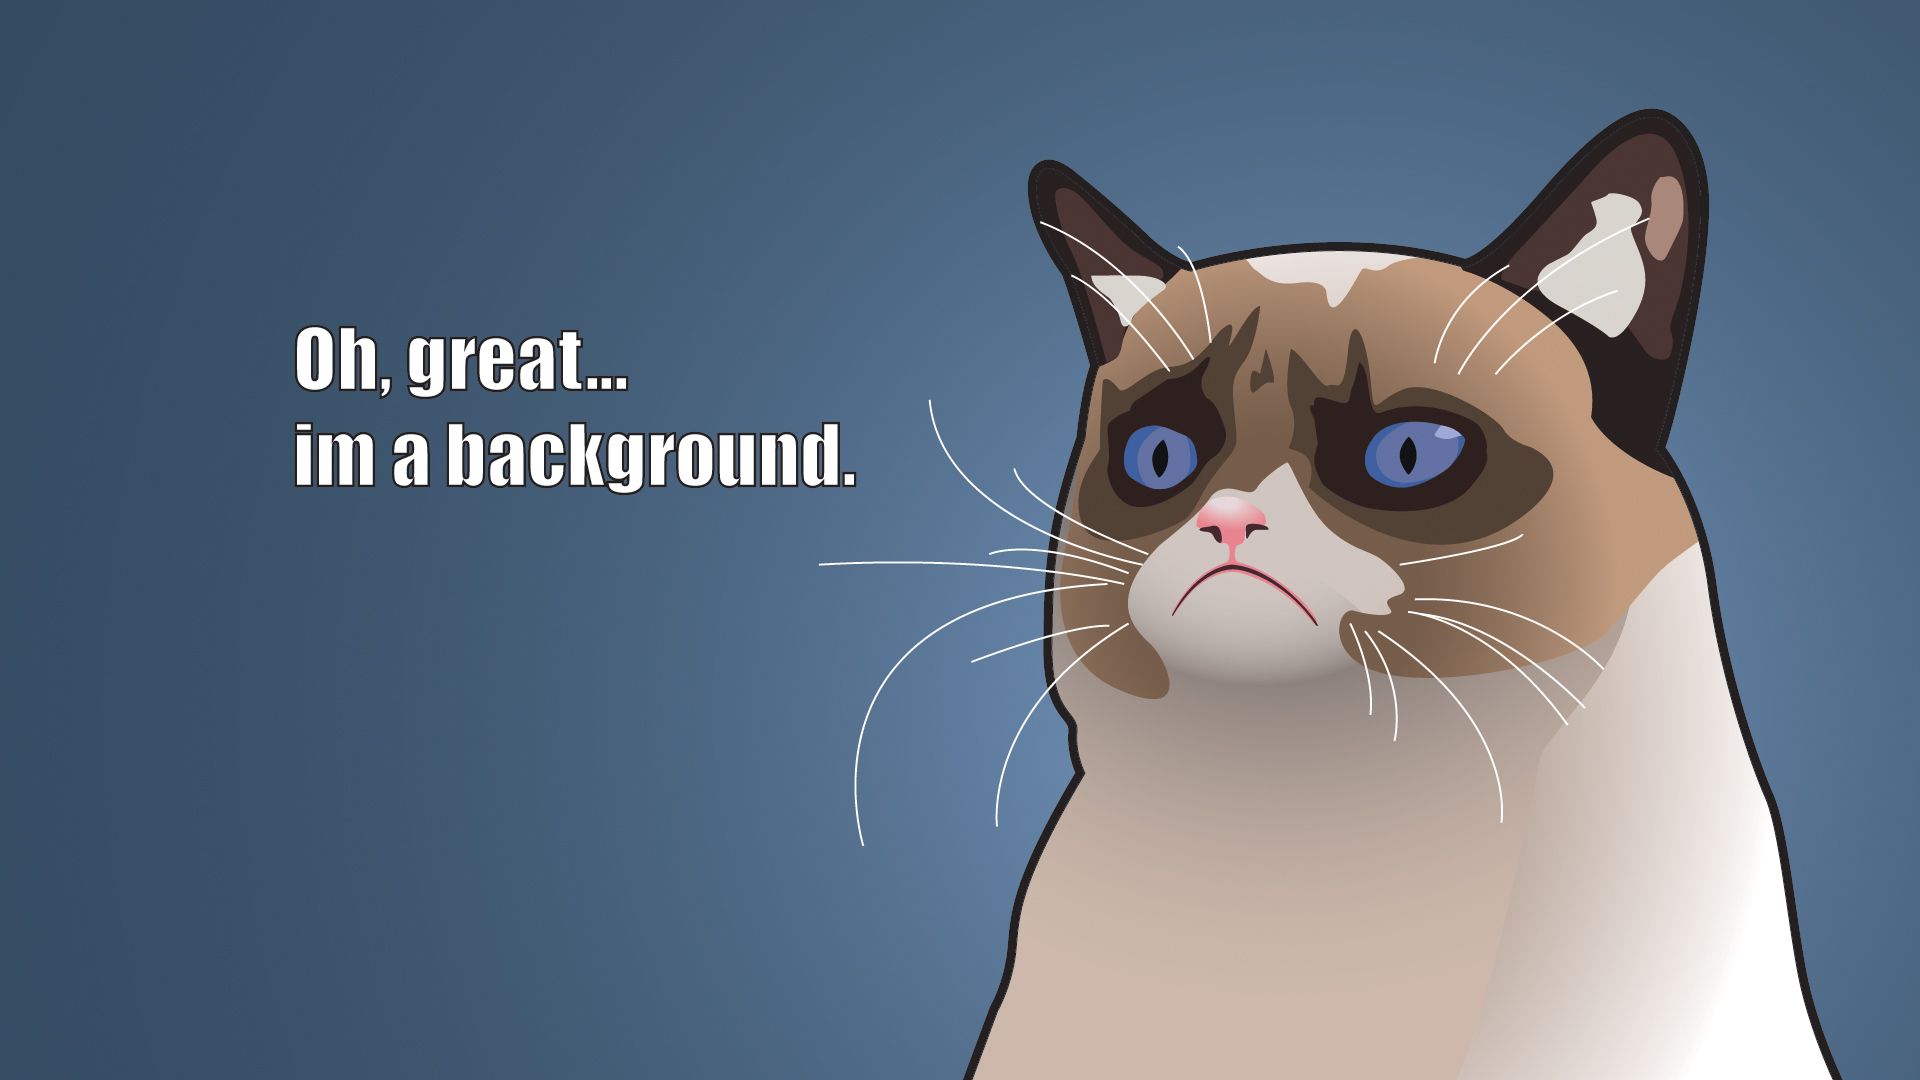 Grumpy Cat Wallpaper. Grumpy cat meme, Grumpy cat cartoon, Cat background